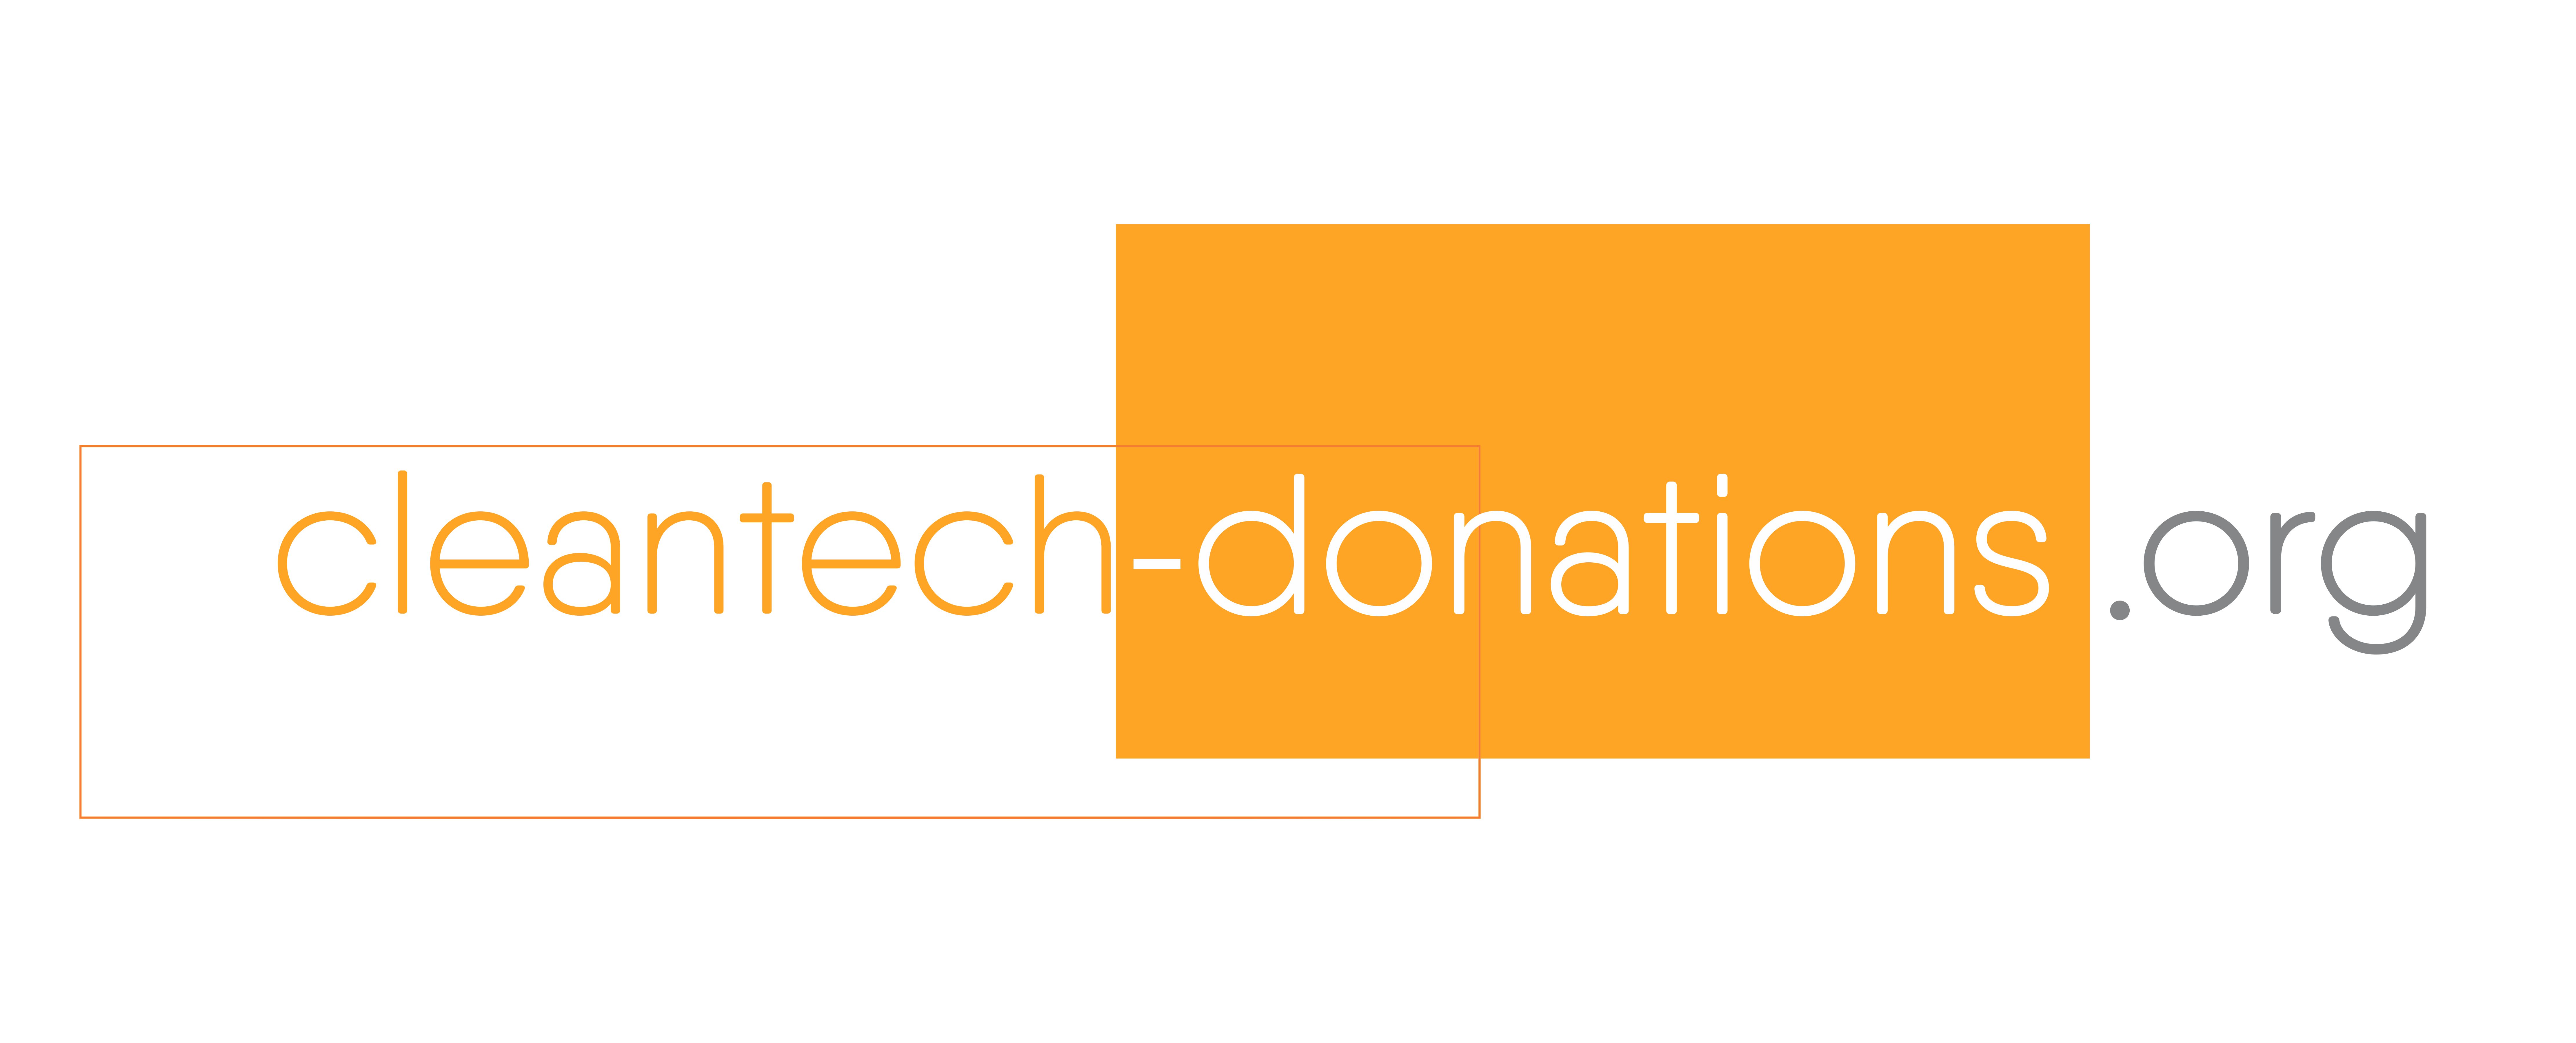 cleantech-donate.org logo